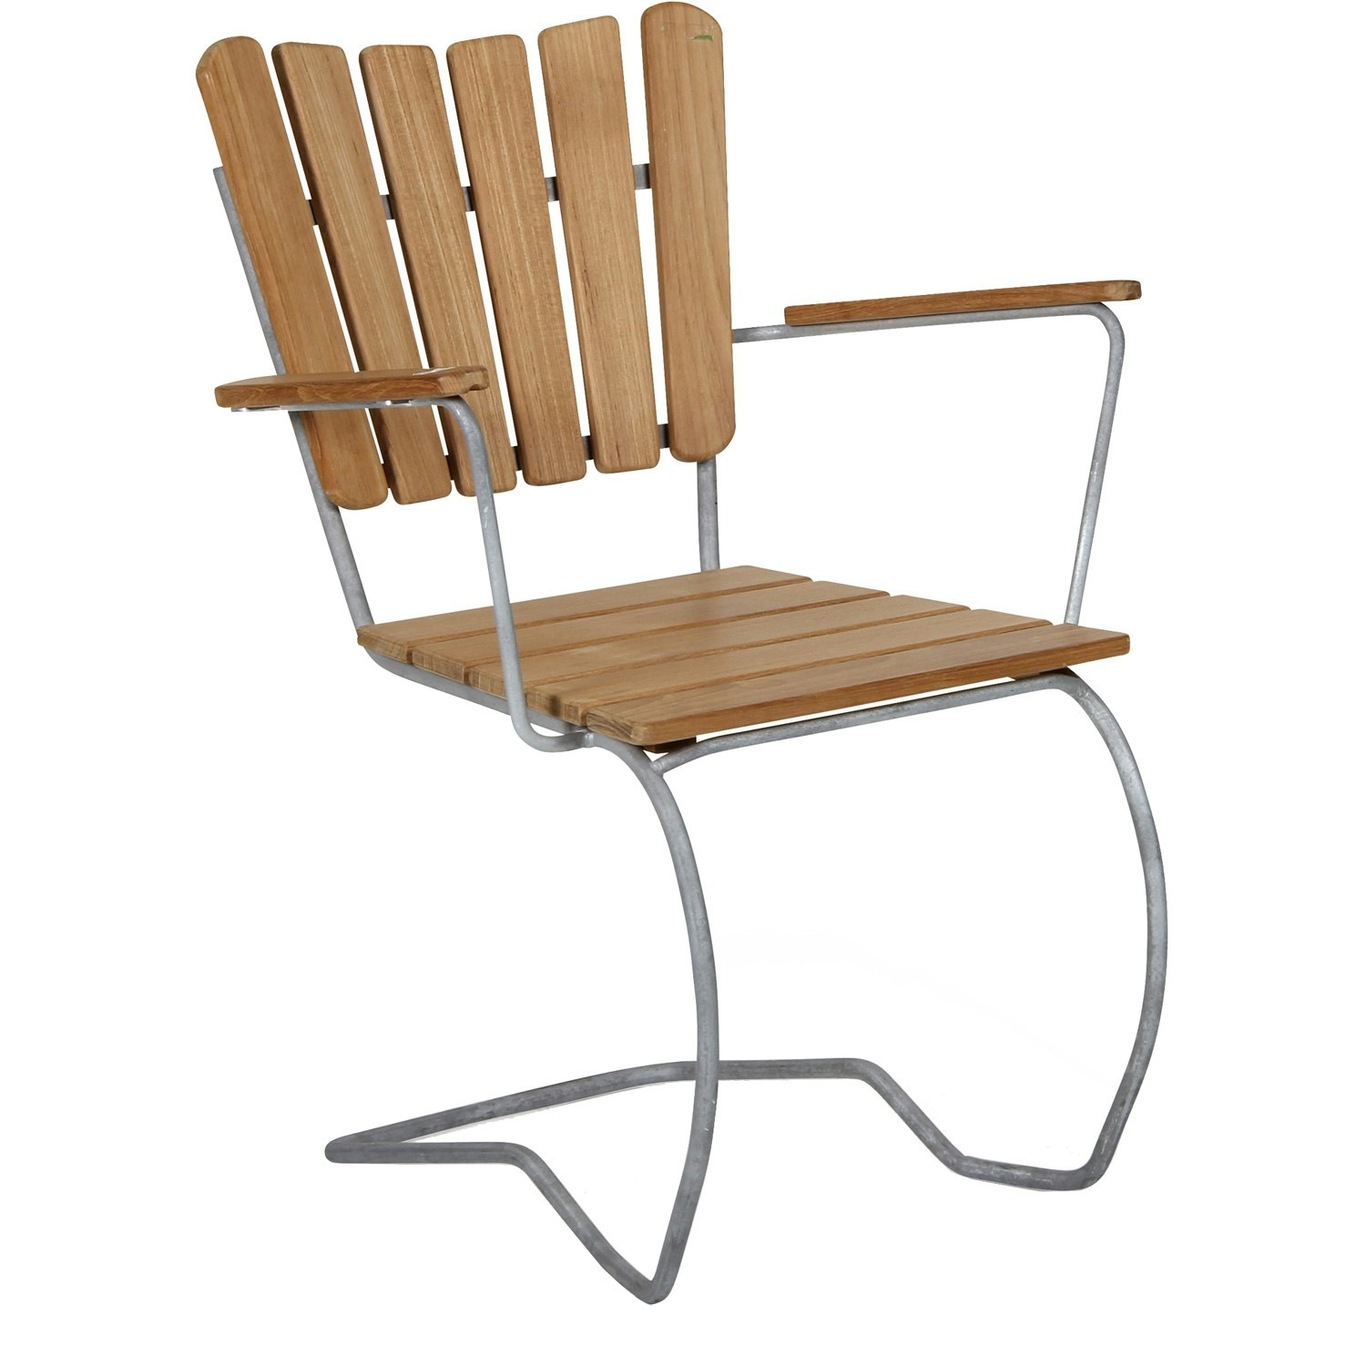 56:An Chair, Galvanized/Teak